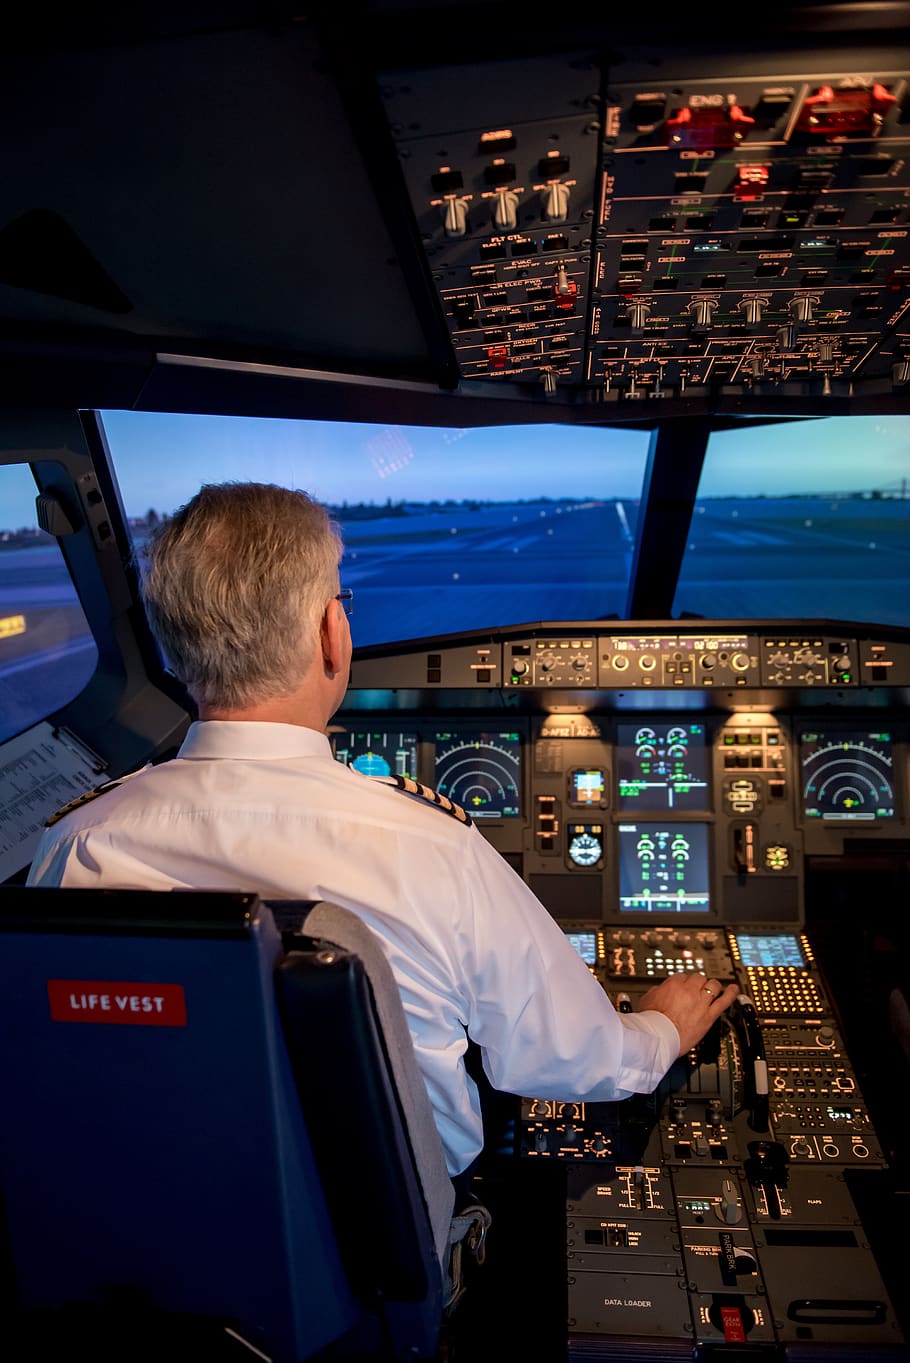 jet, cockpit, aircraft, flying, sky, pilot, aviation, captain, technology, control